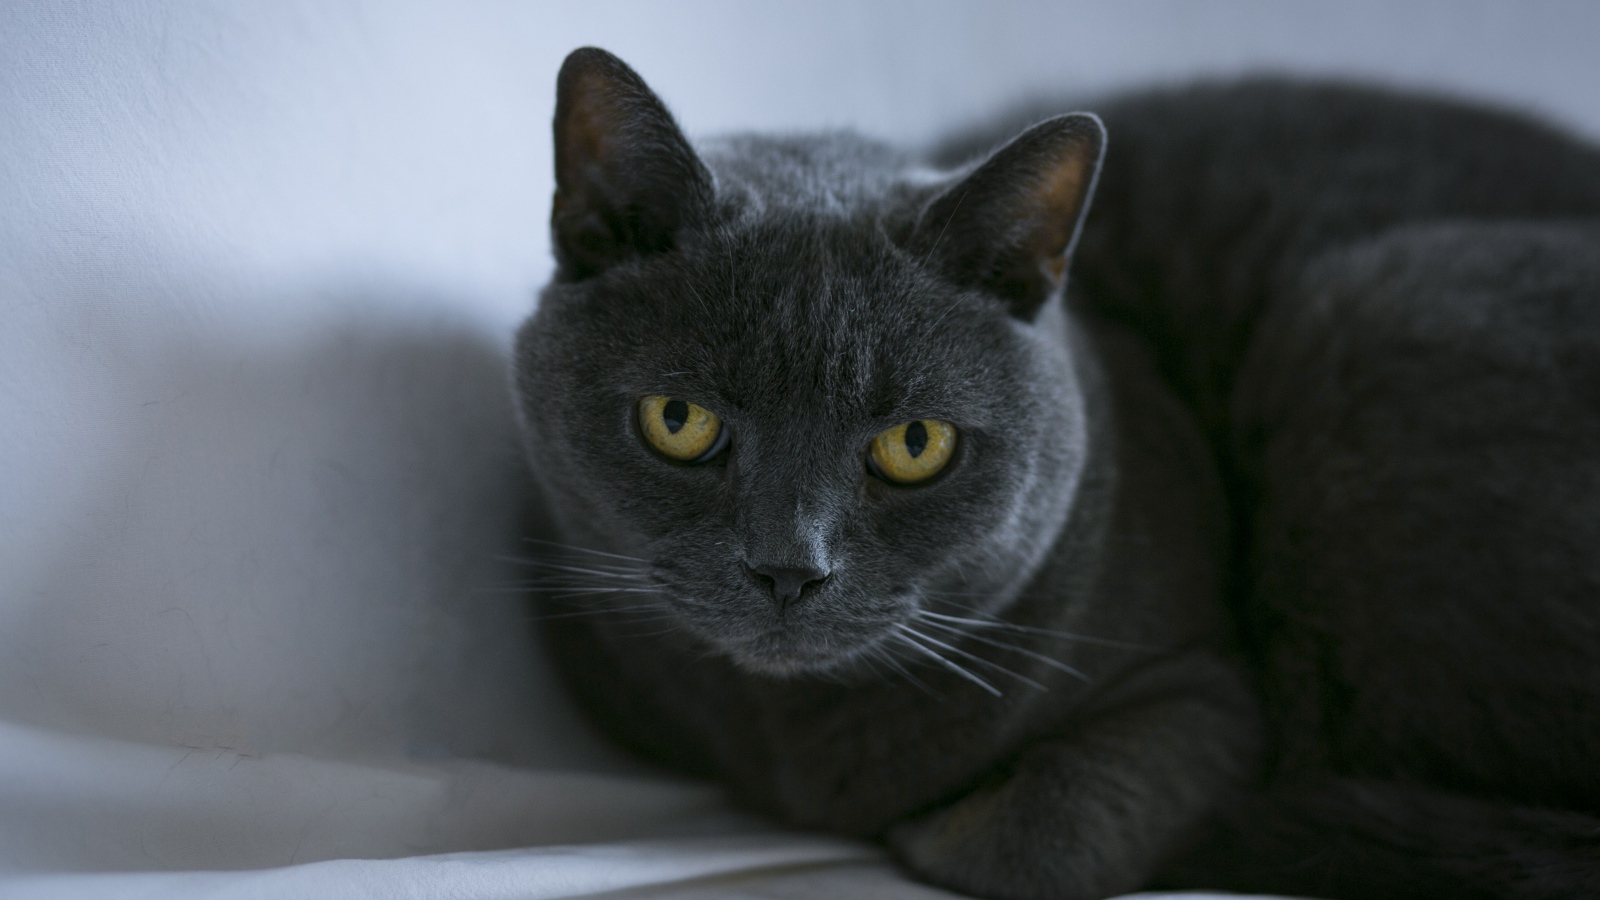 Purebred British cat lies on a gray bedspread